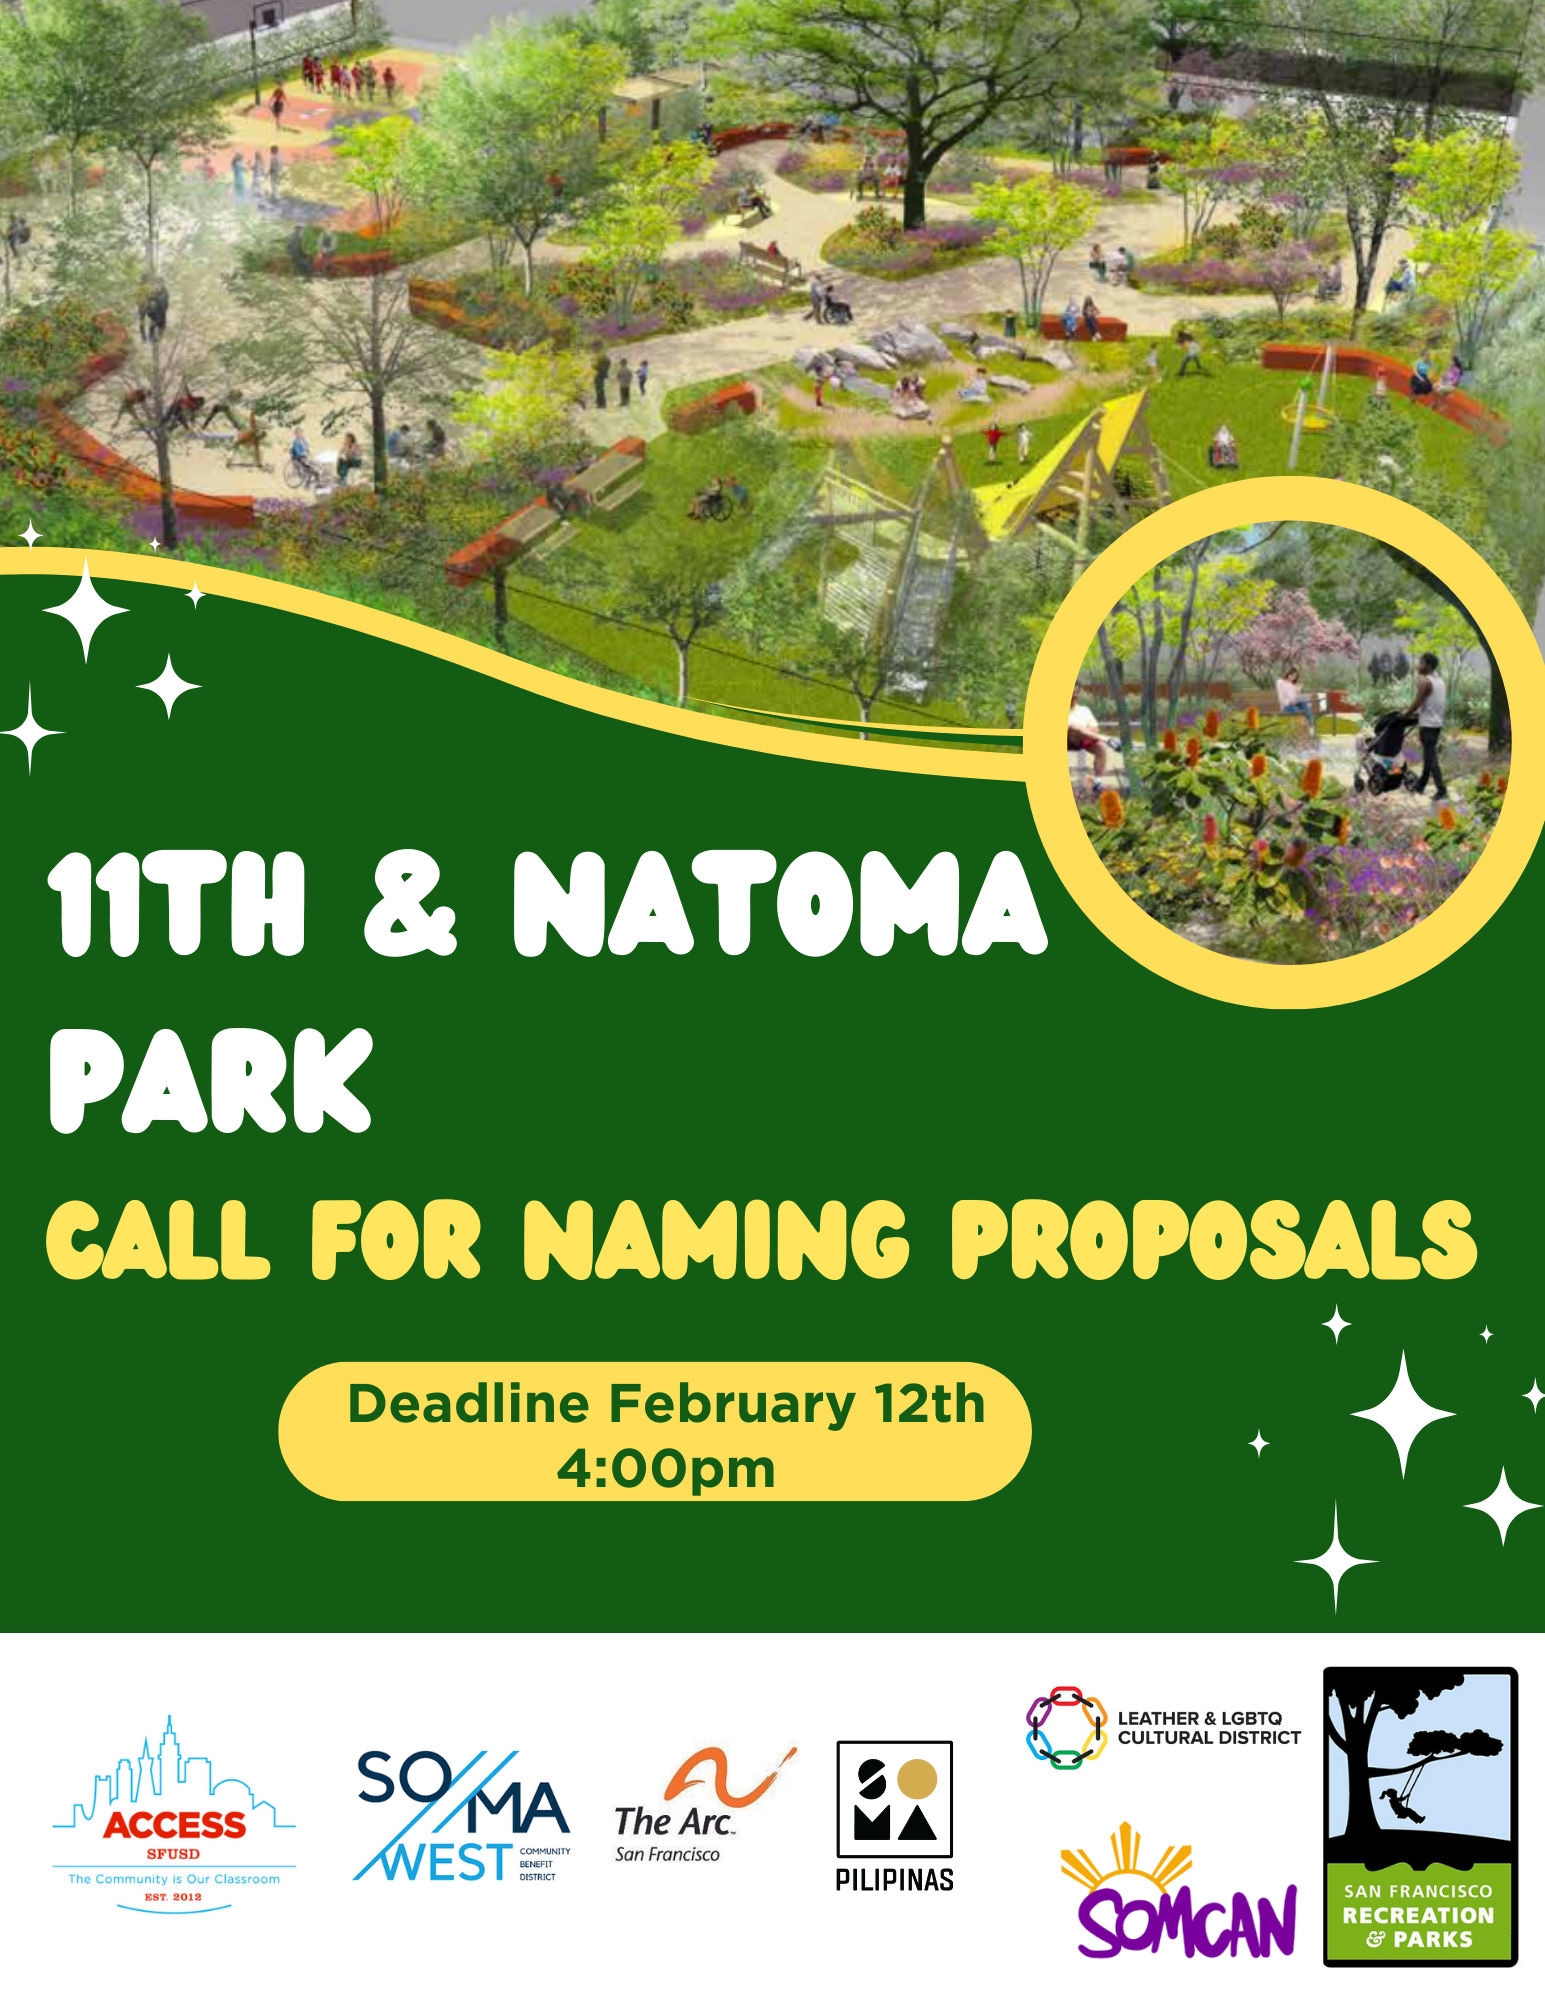 11th & Natoma Park: Call for Naming Proposals